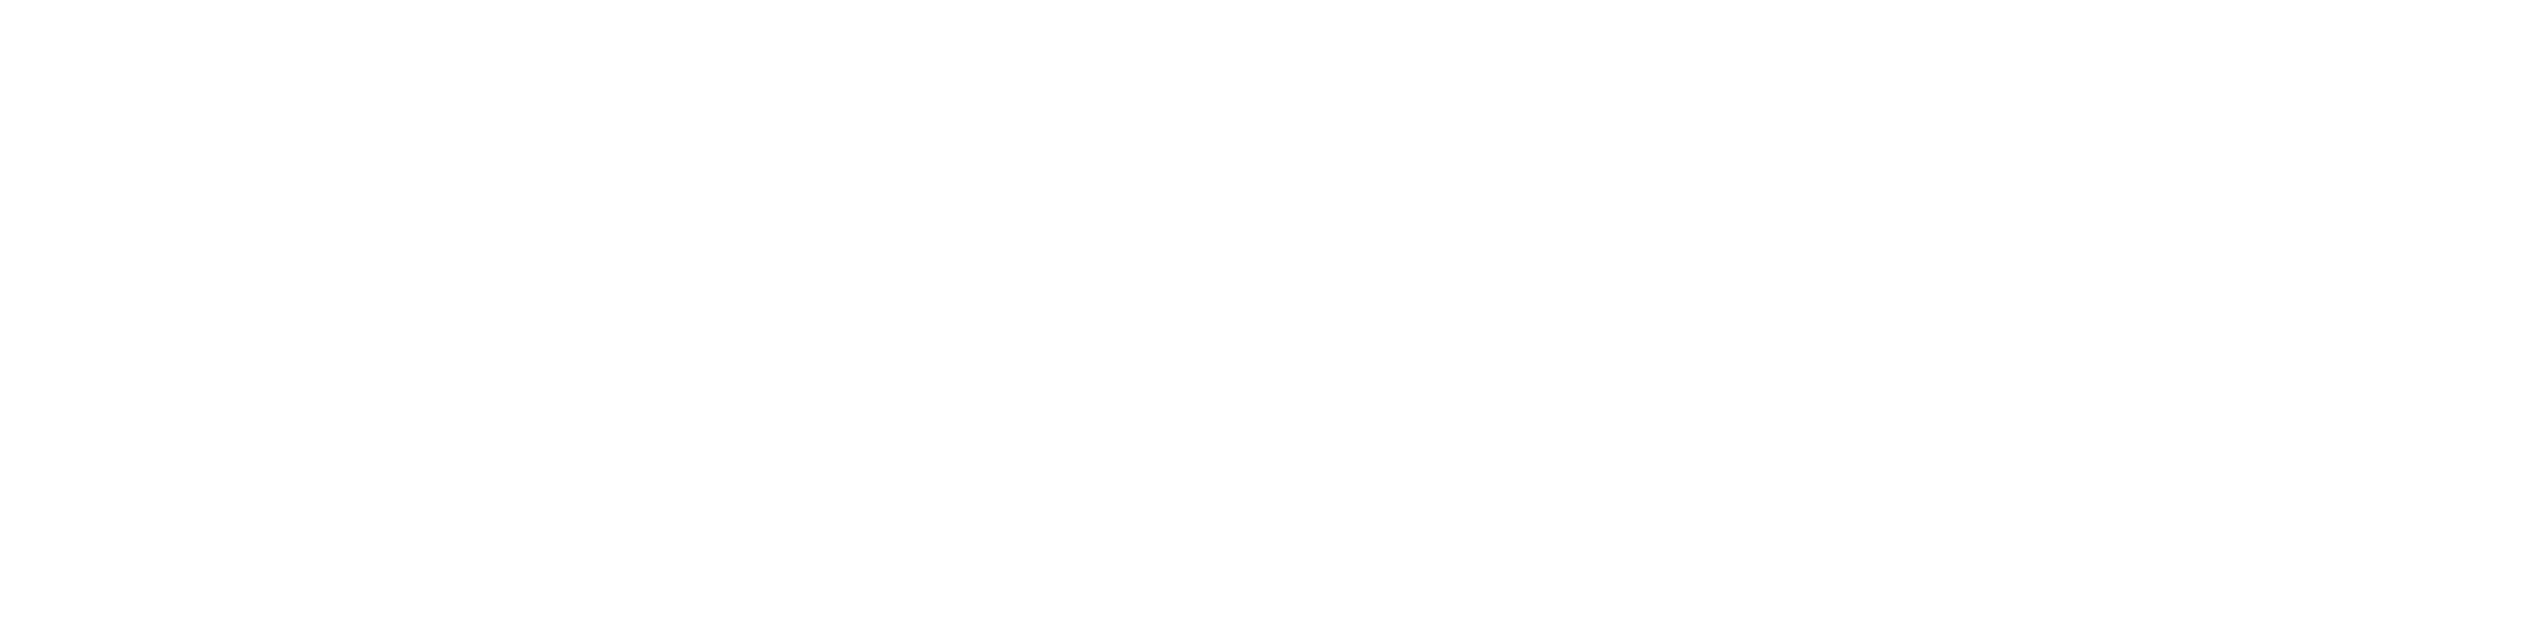 Brain Based Coaching Certificate logo